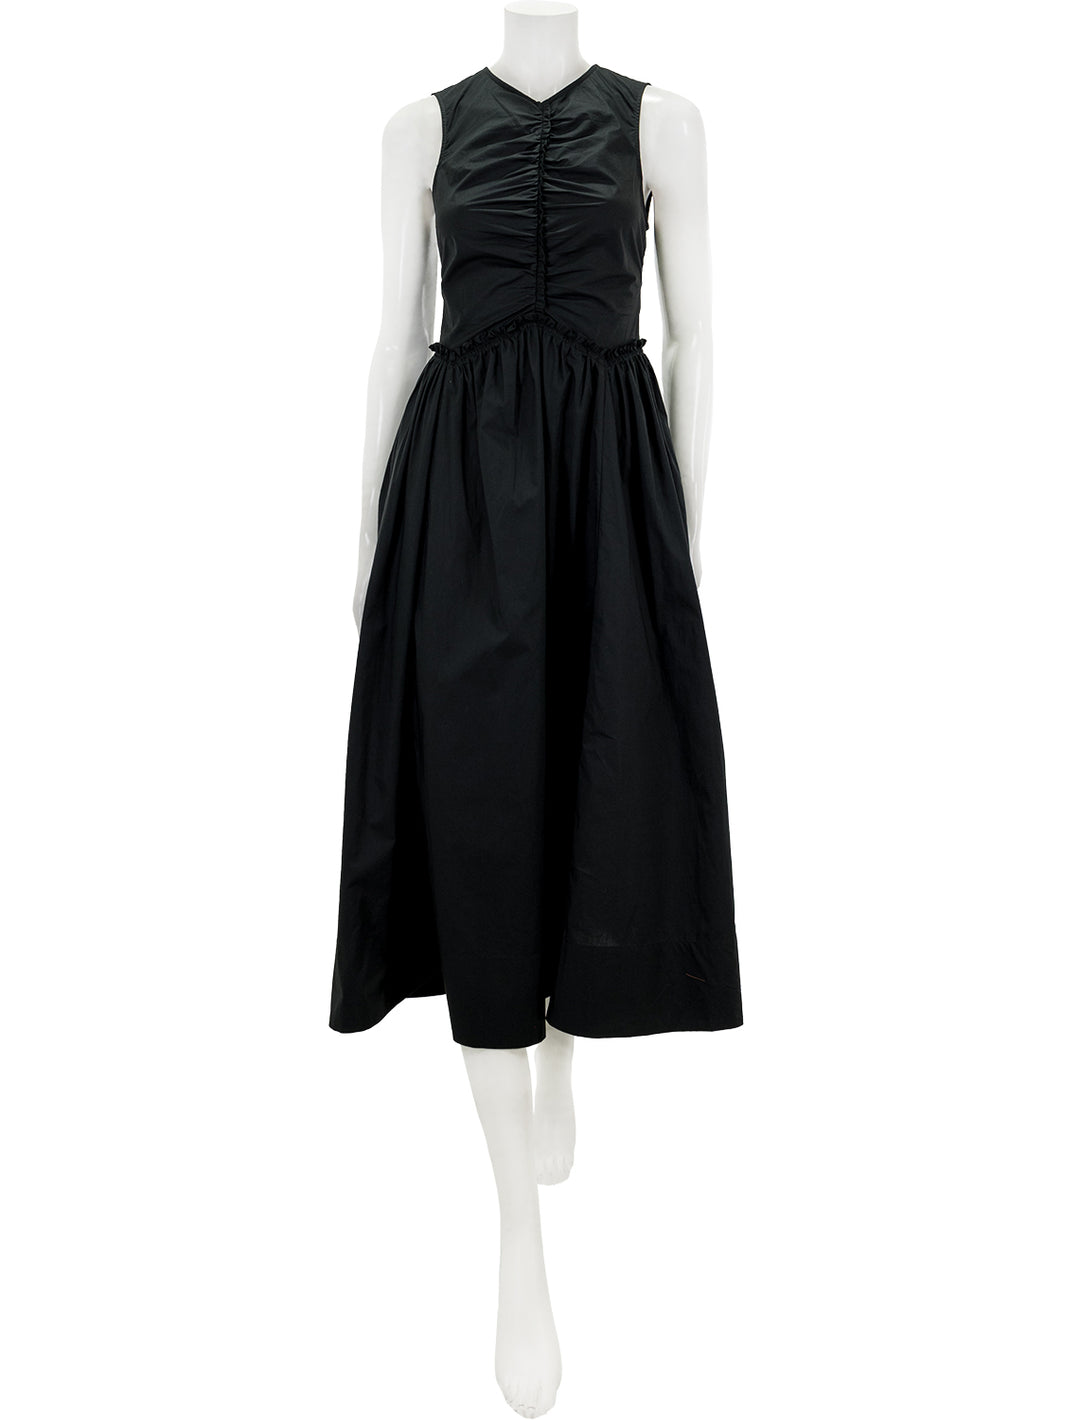 Front view of Ulla Johnson's mimi dress in noir.